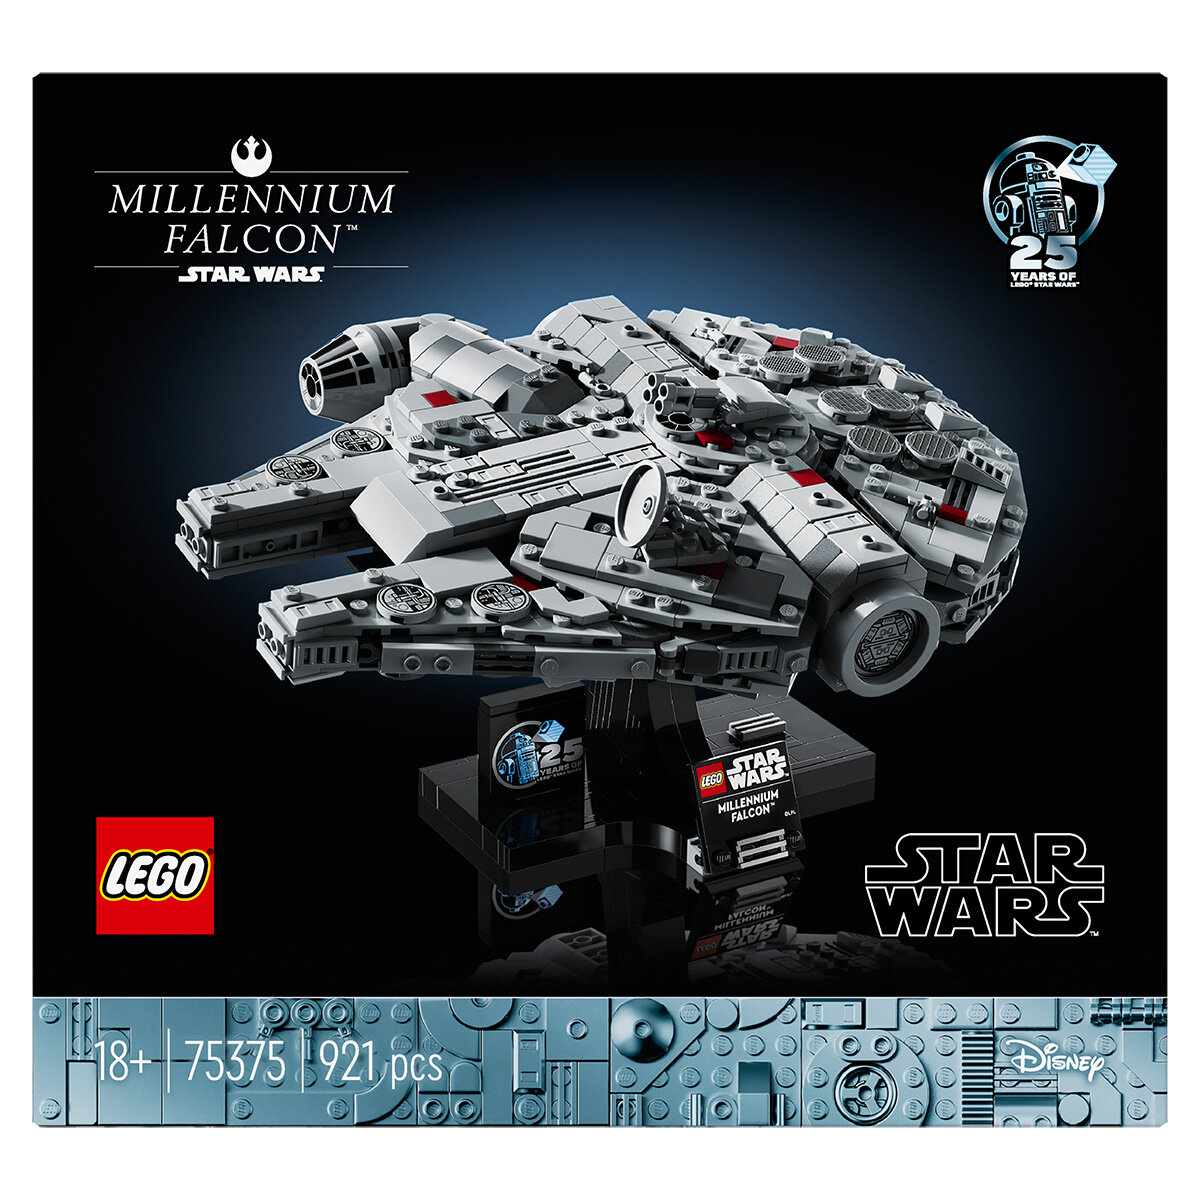 Buy LEGO Star Wars Millennium Falcon Box & Item Image at Costco.co.uk